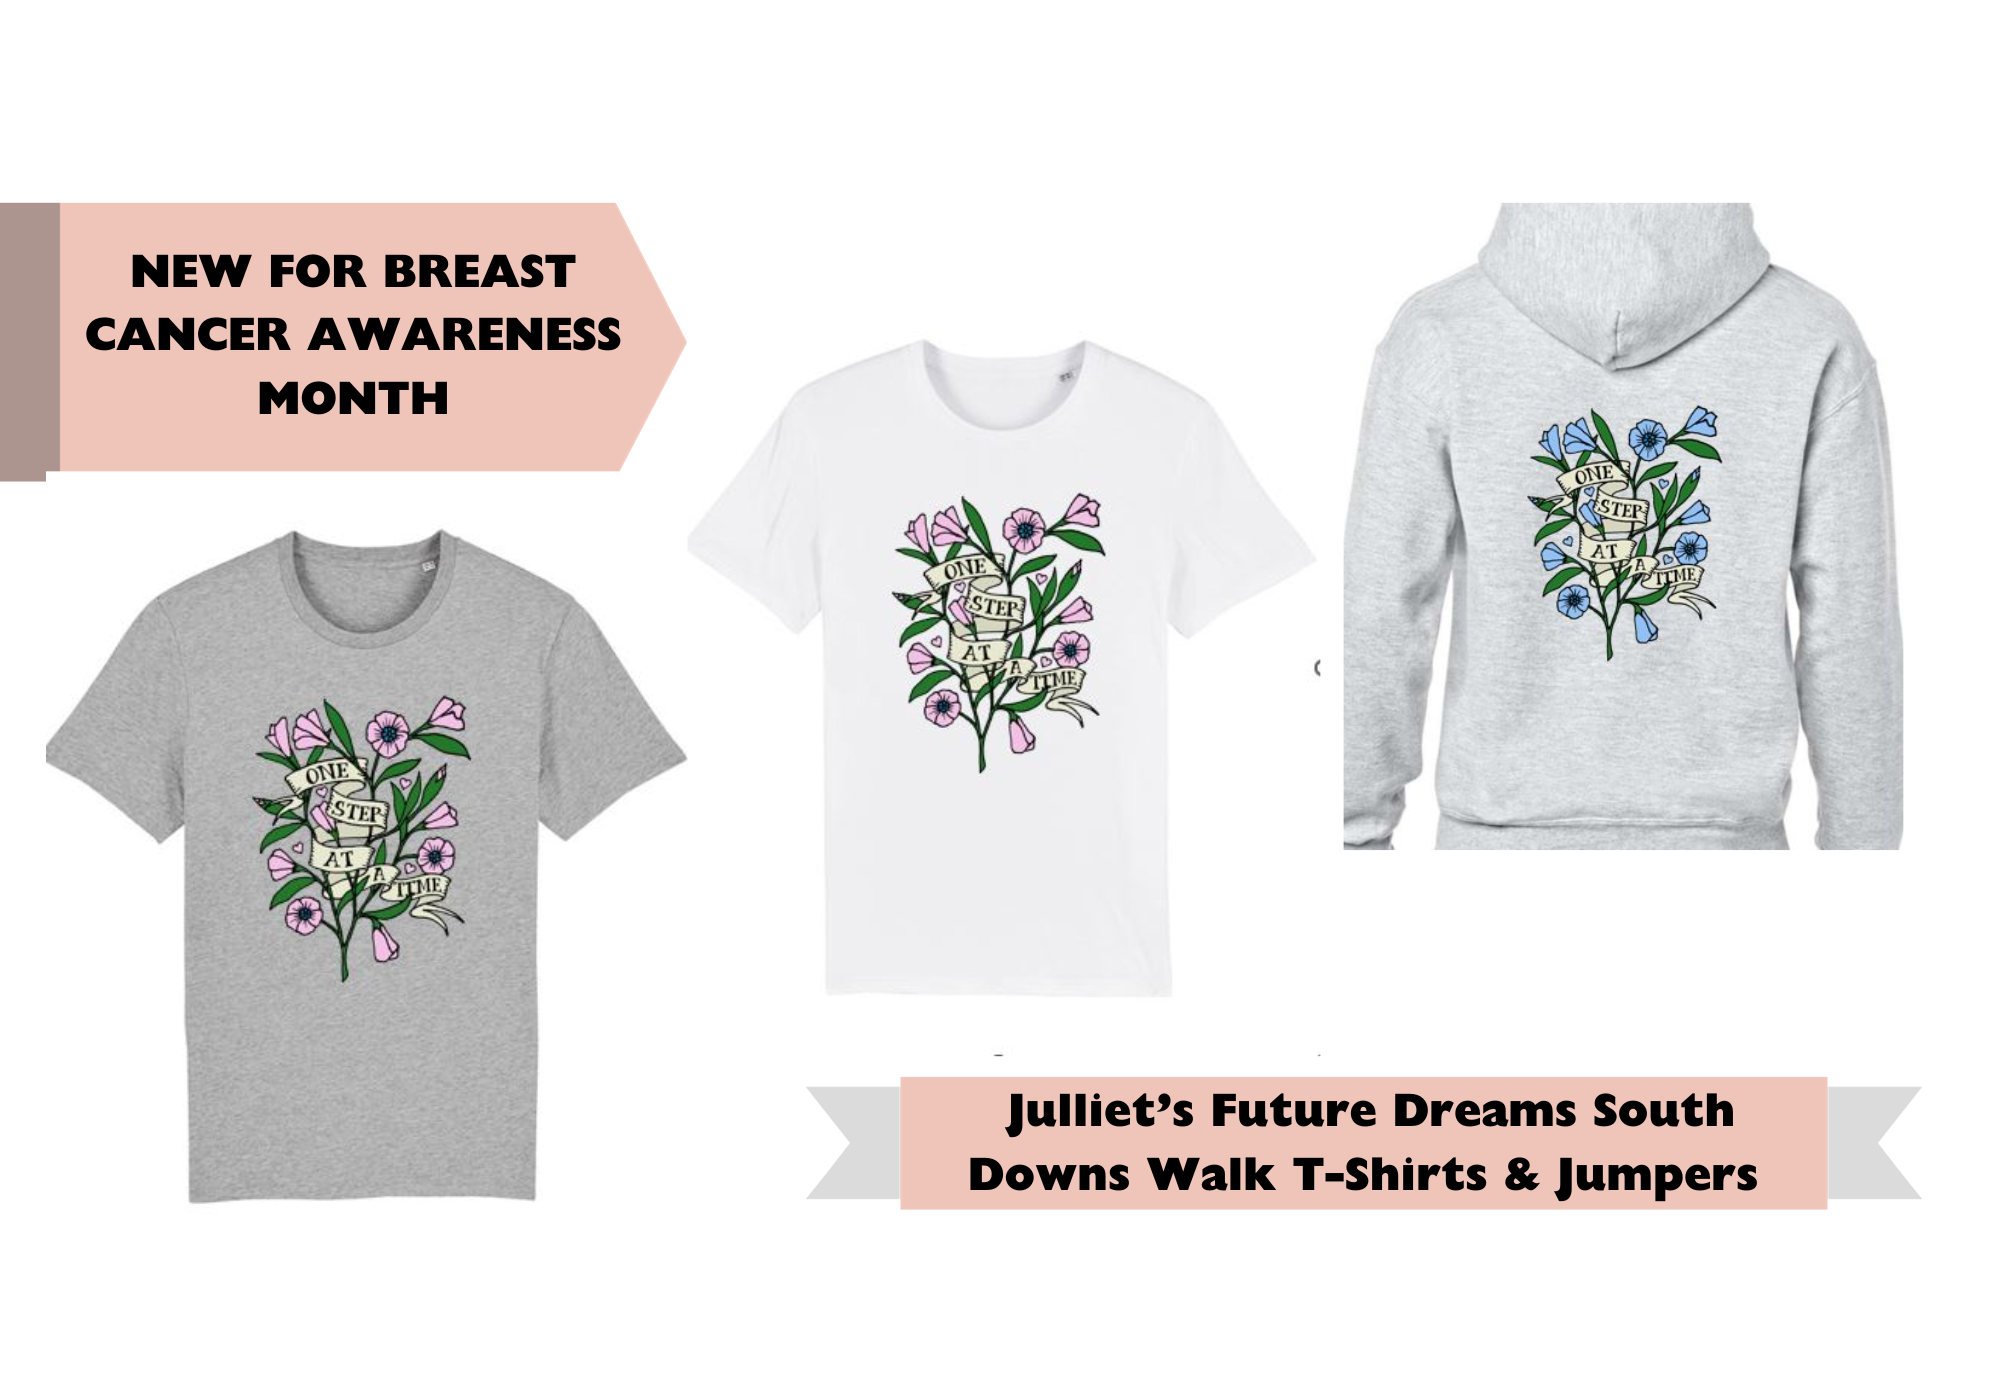 Future Dreams T-shirts and jumper south downs walk